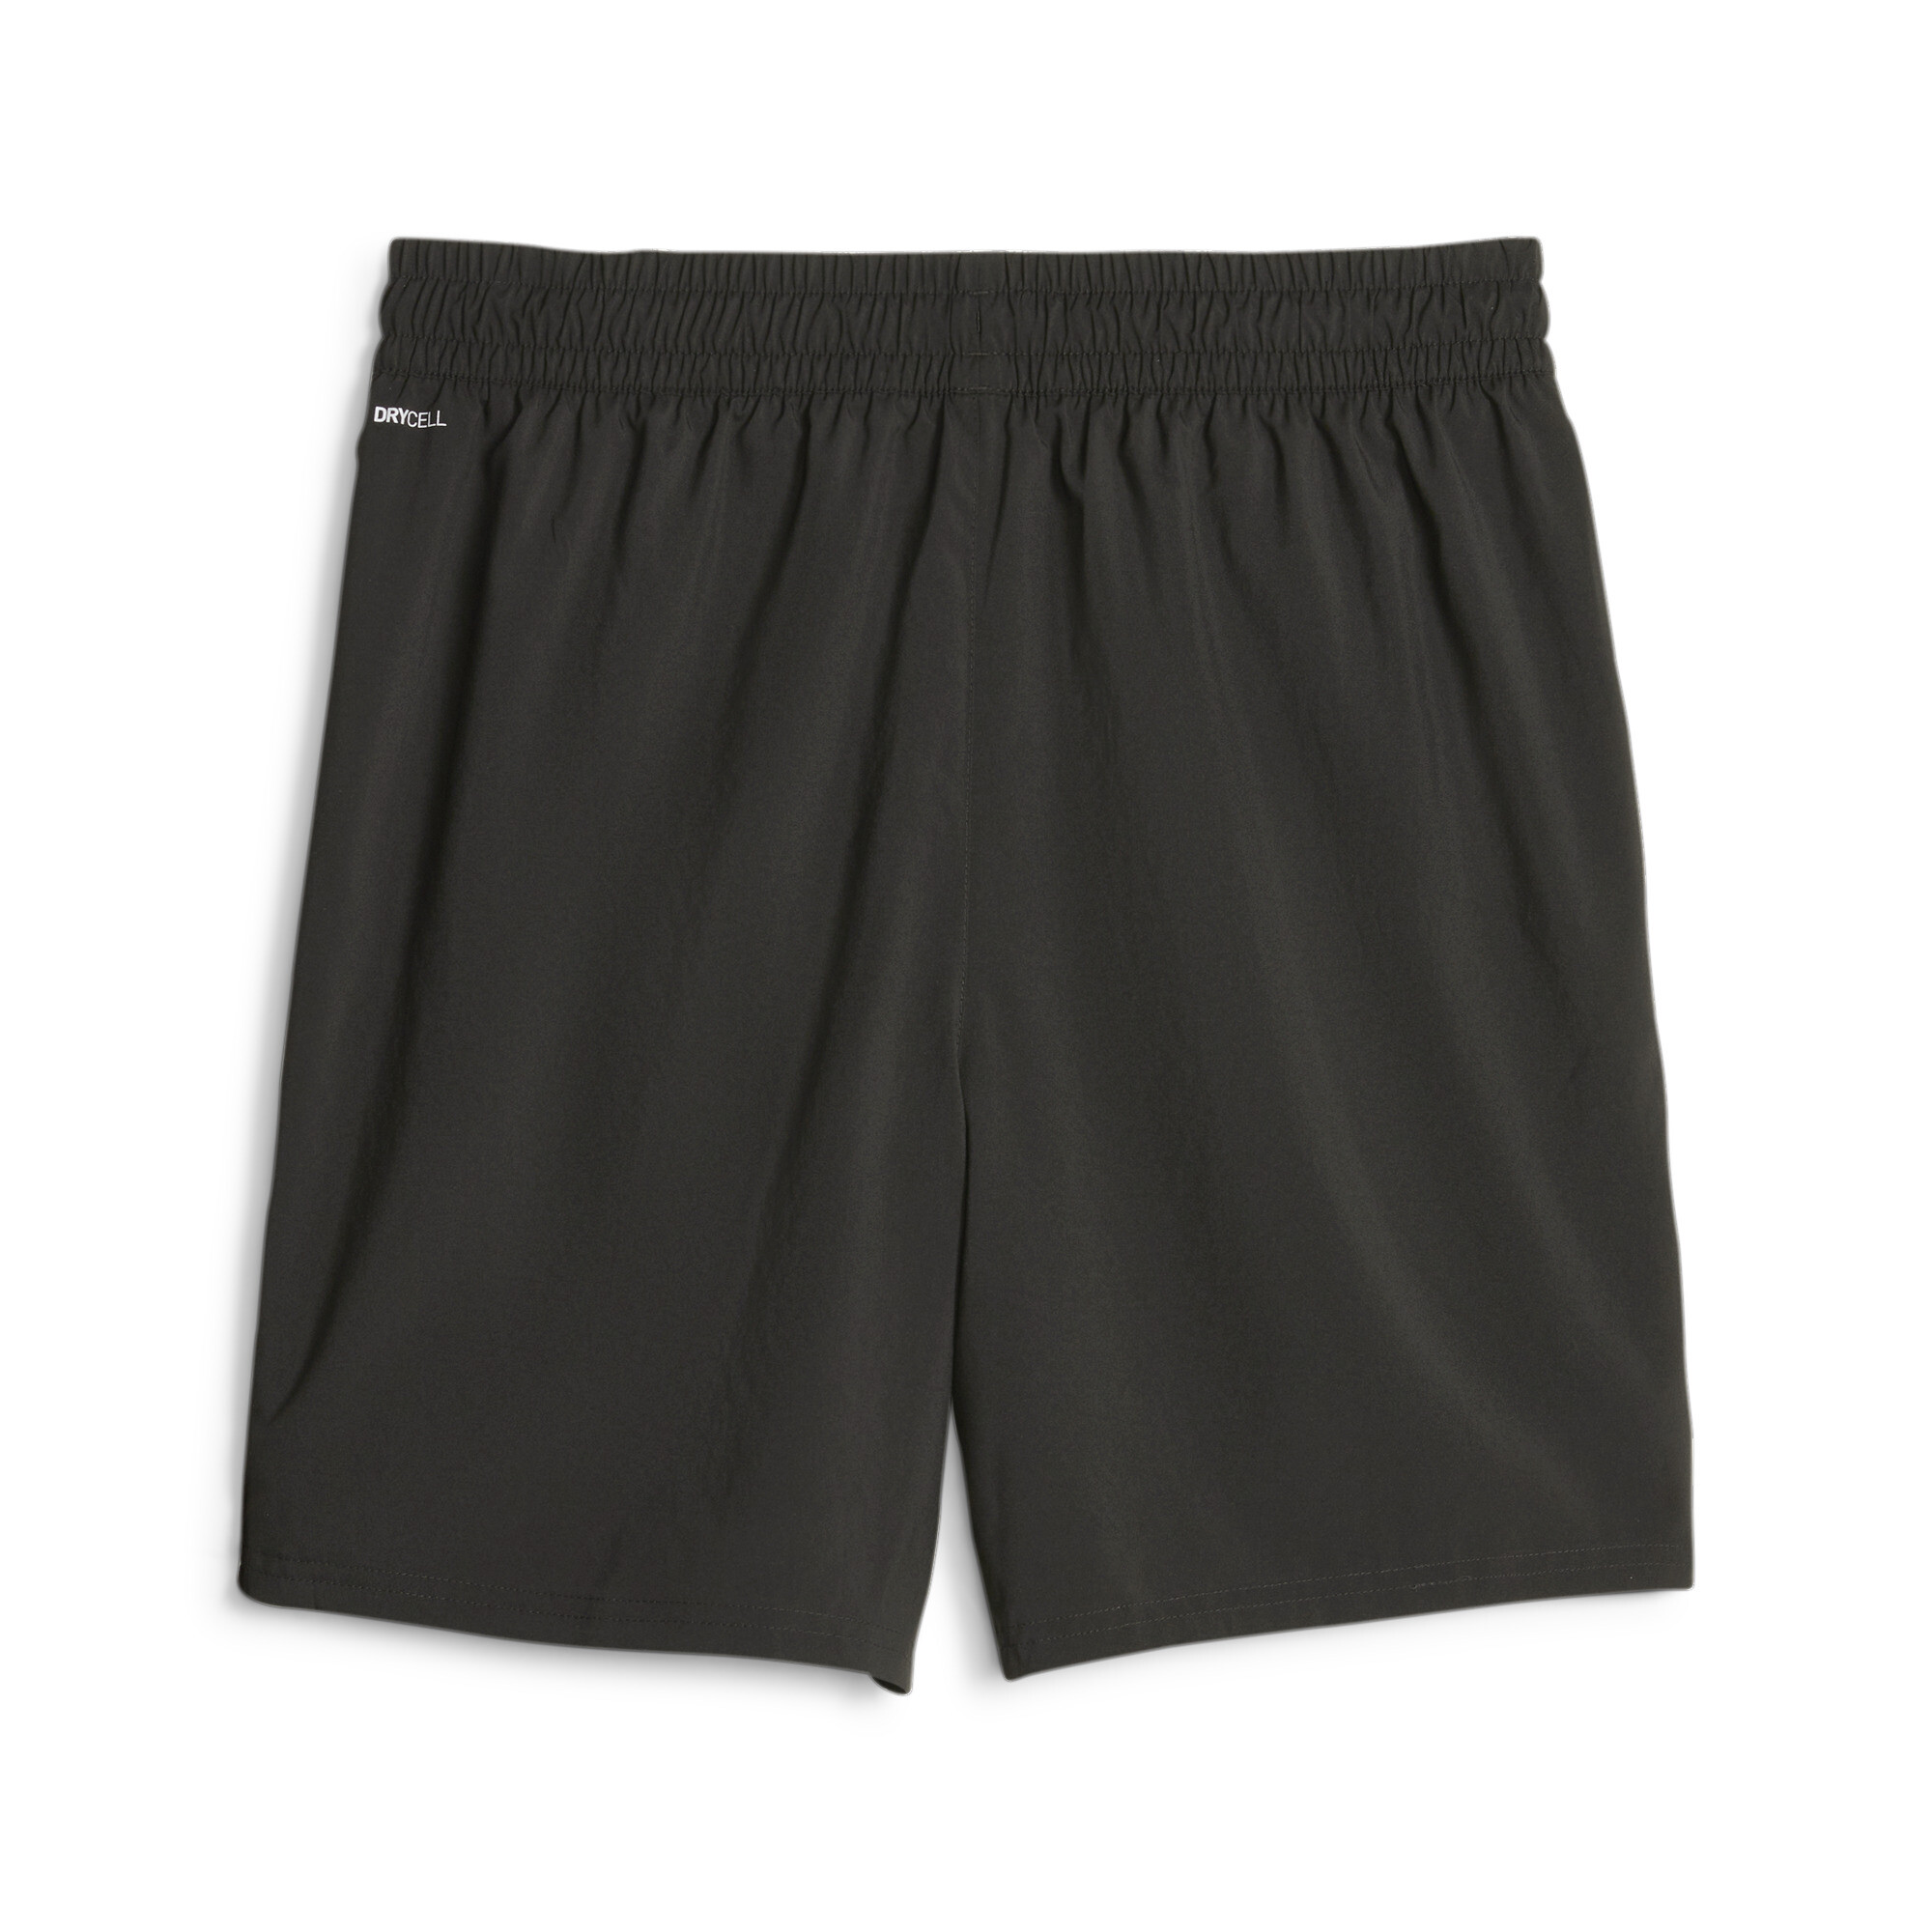 Men's PUMA Fit 7 Training Shorts In Black, Size 2XL